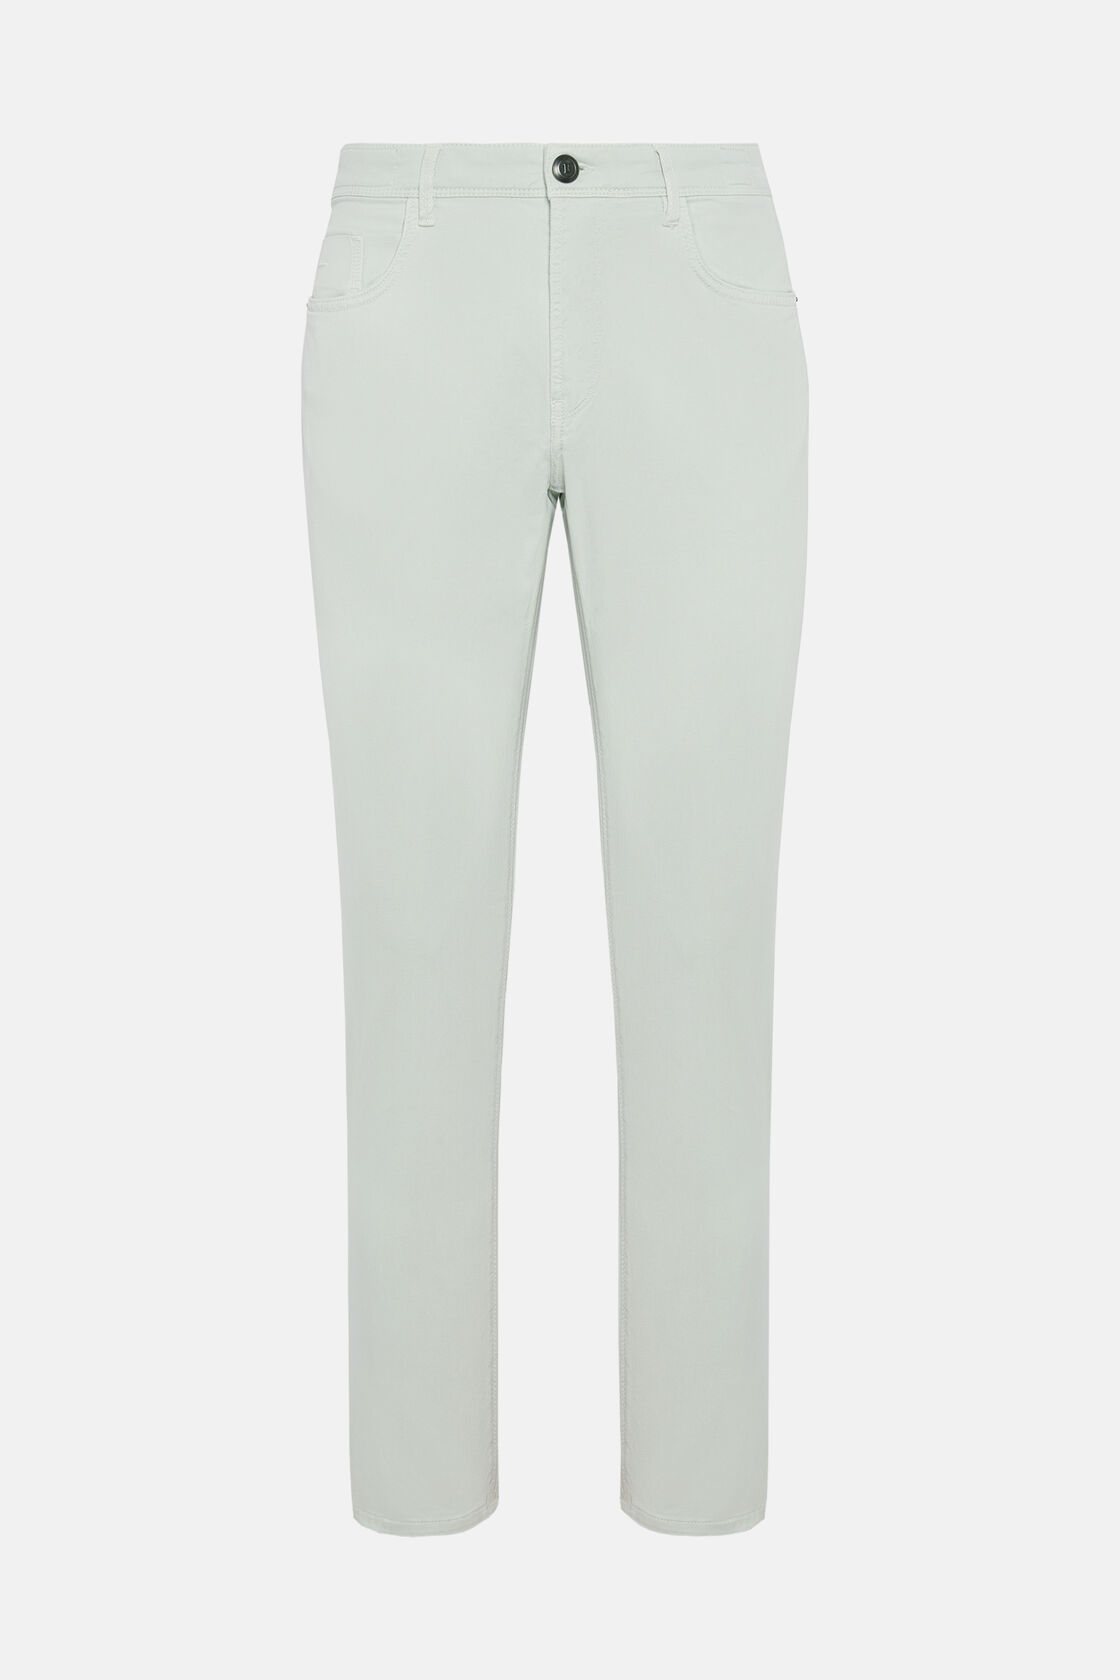 Stretch Cotton/Tencel Jeans, Light Green, hi-res